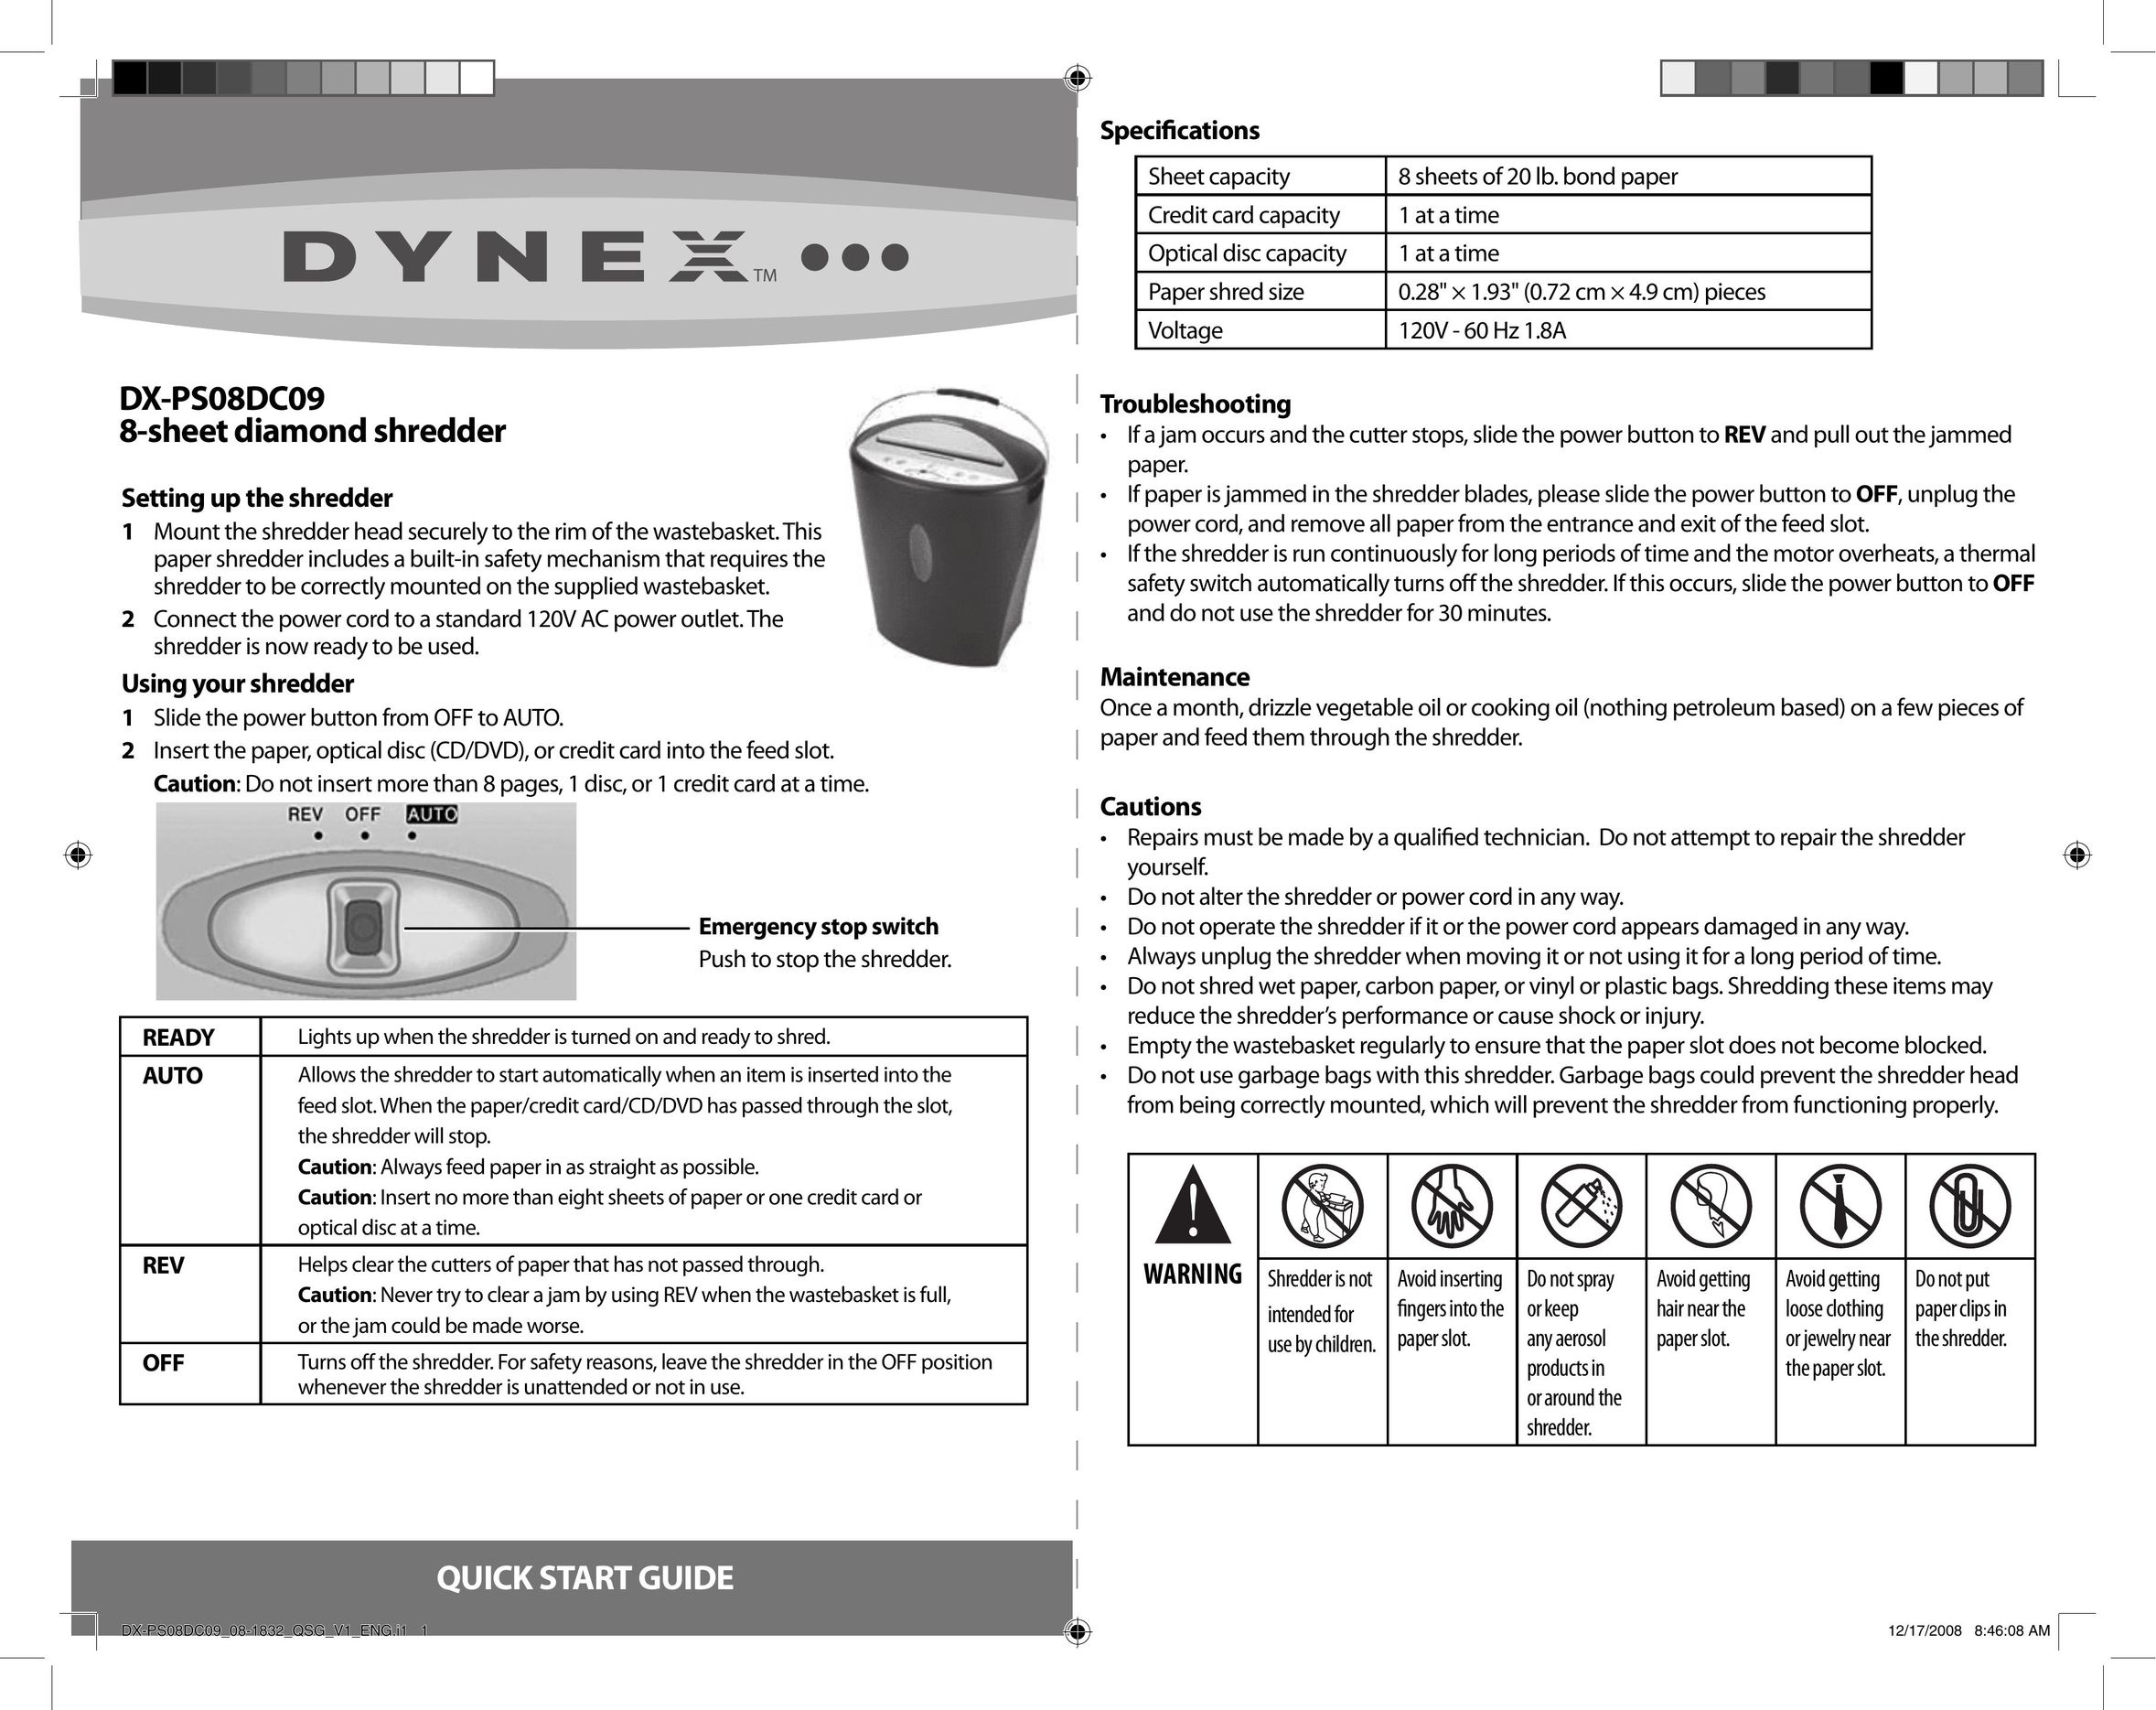 Dynex DX-PS08DC09 Paper Shredder User Manual